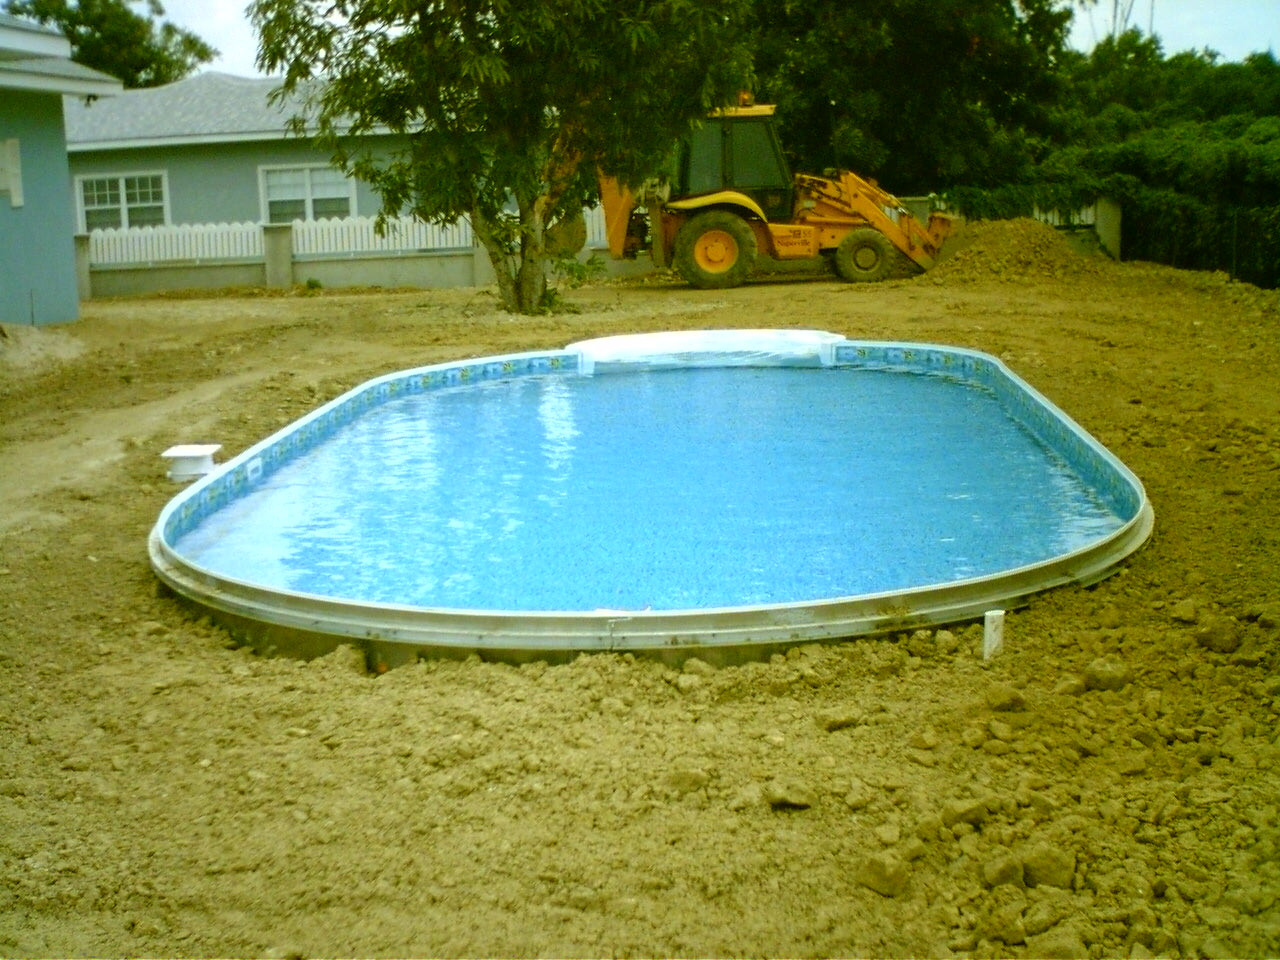 Best ideas about Homemade Inground Pool
. Save or Pin Easy Diy Inground Pool Now.